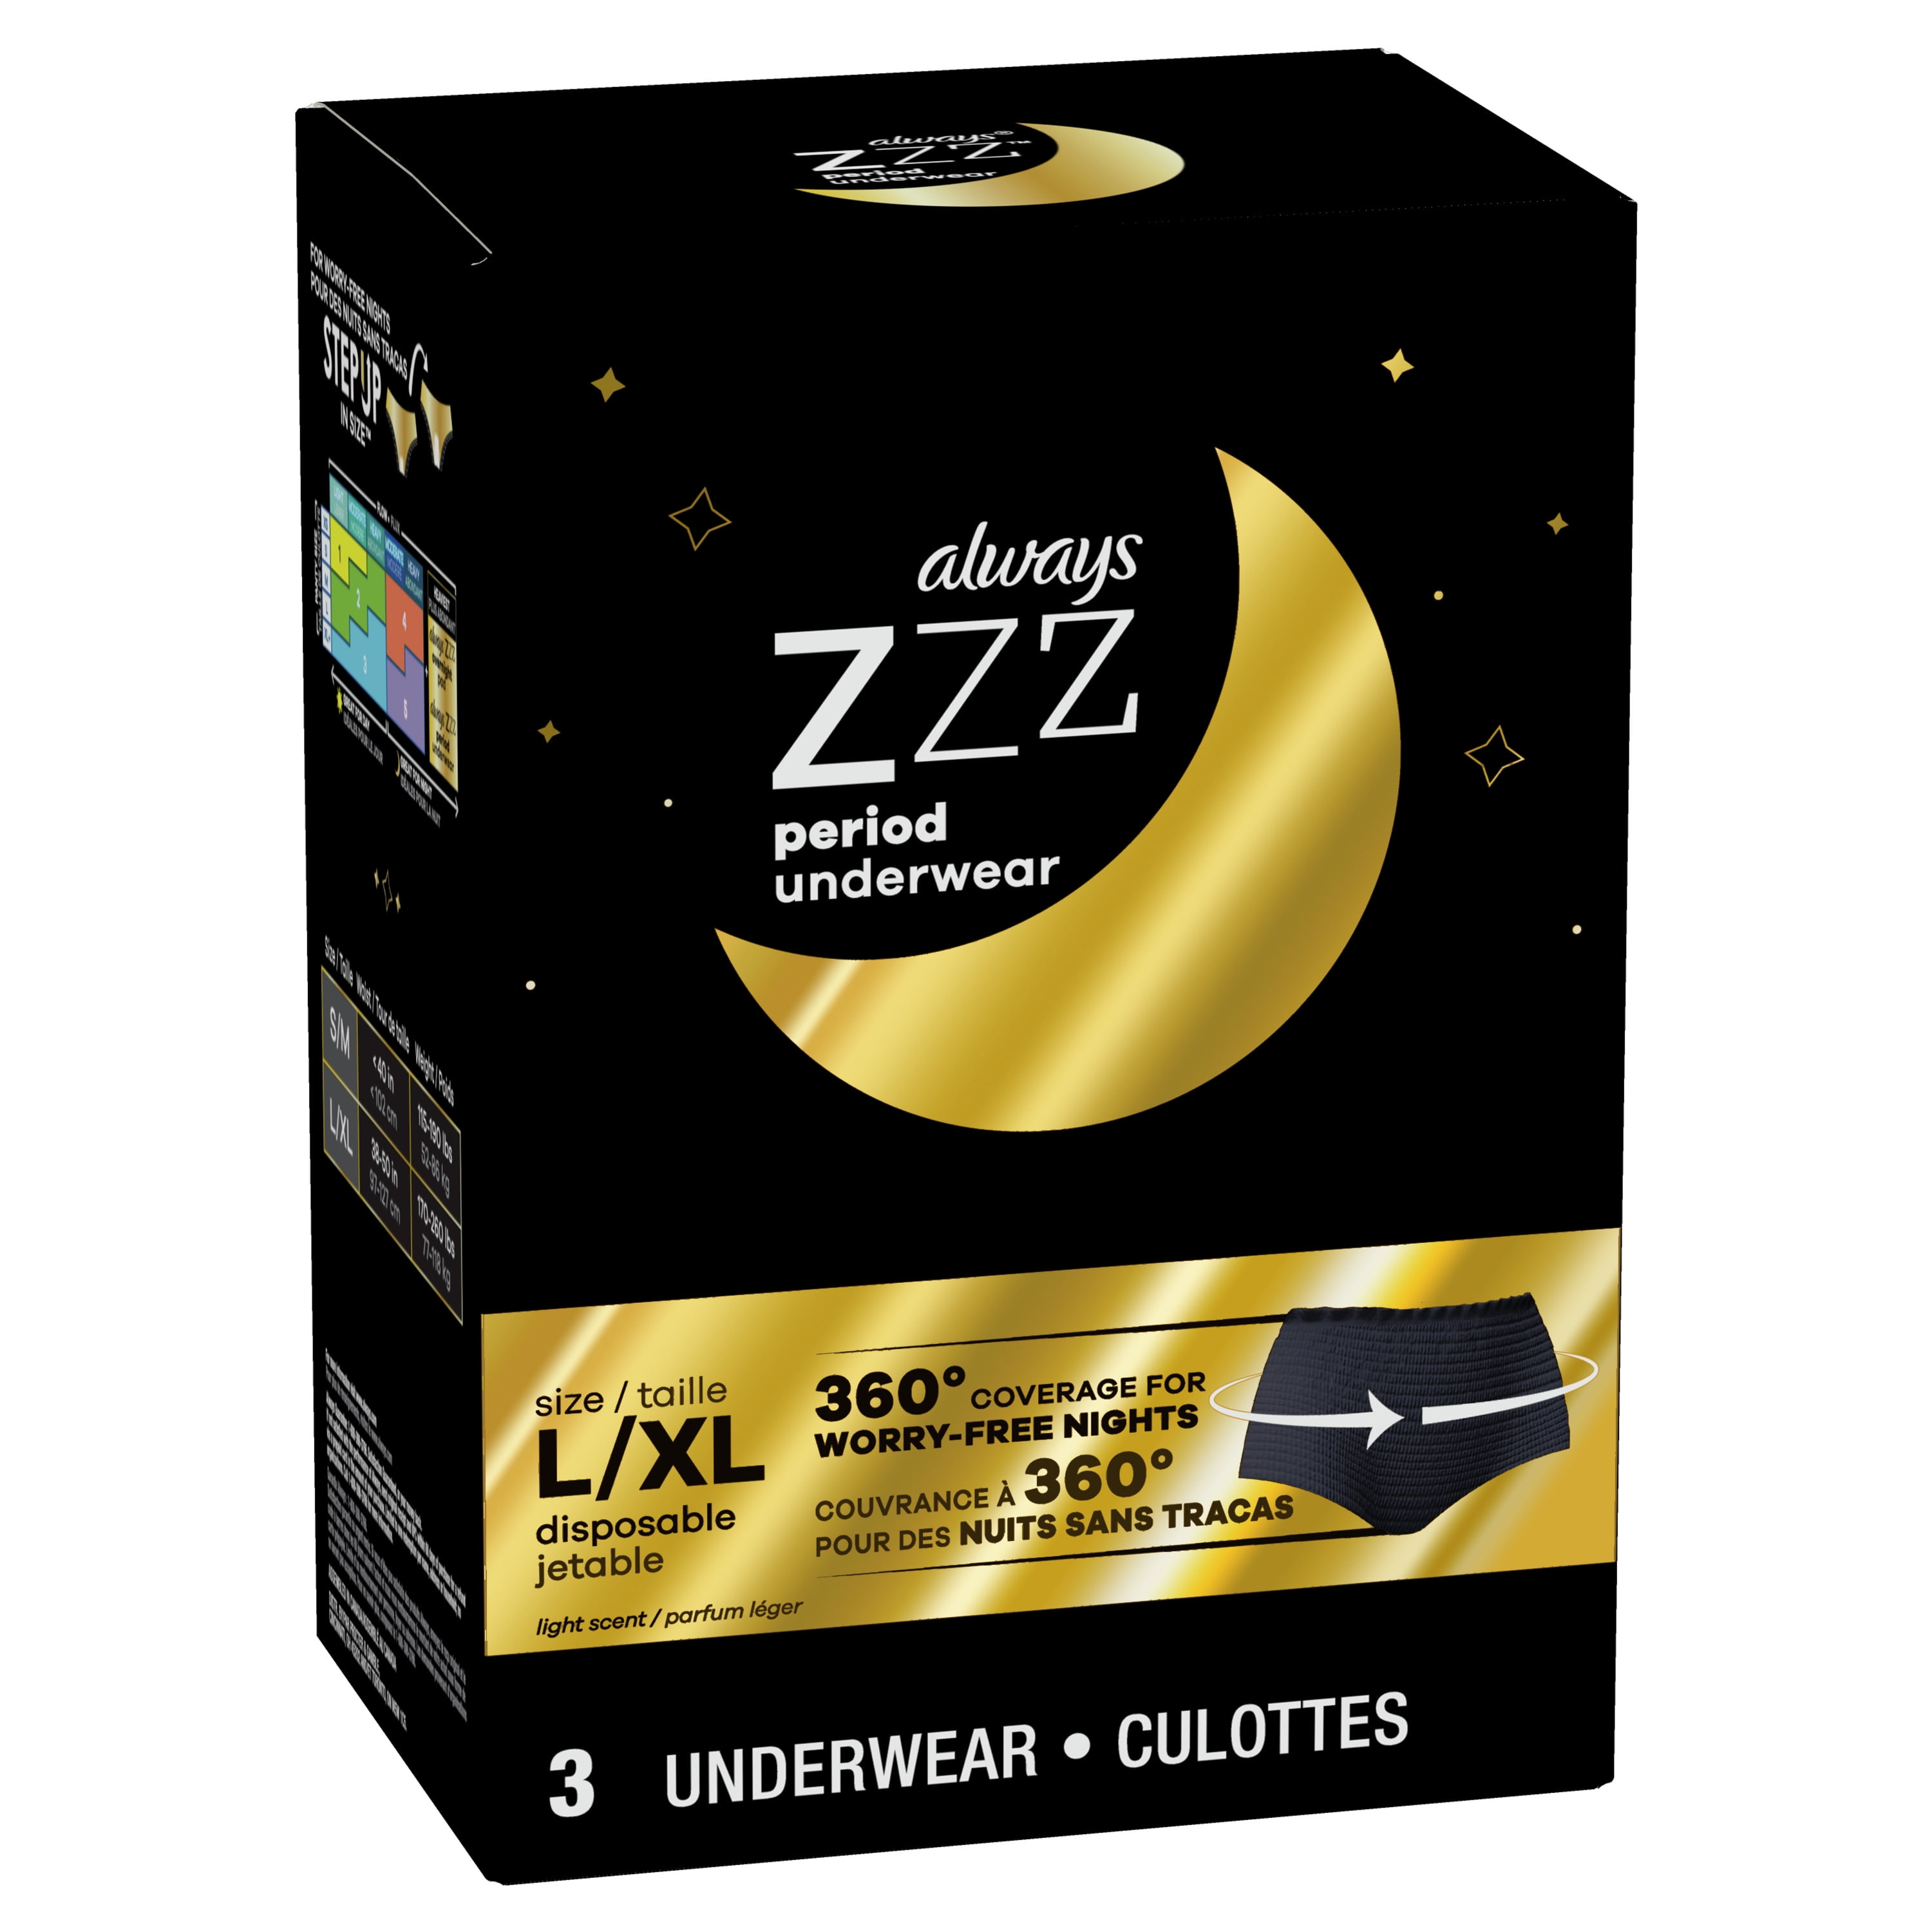 Always ZZZ Overnight Disposable Period Underwear for Women Size LG, 3 Ct